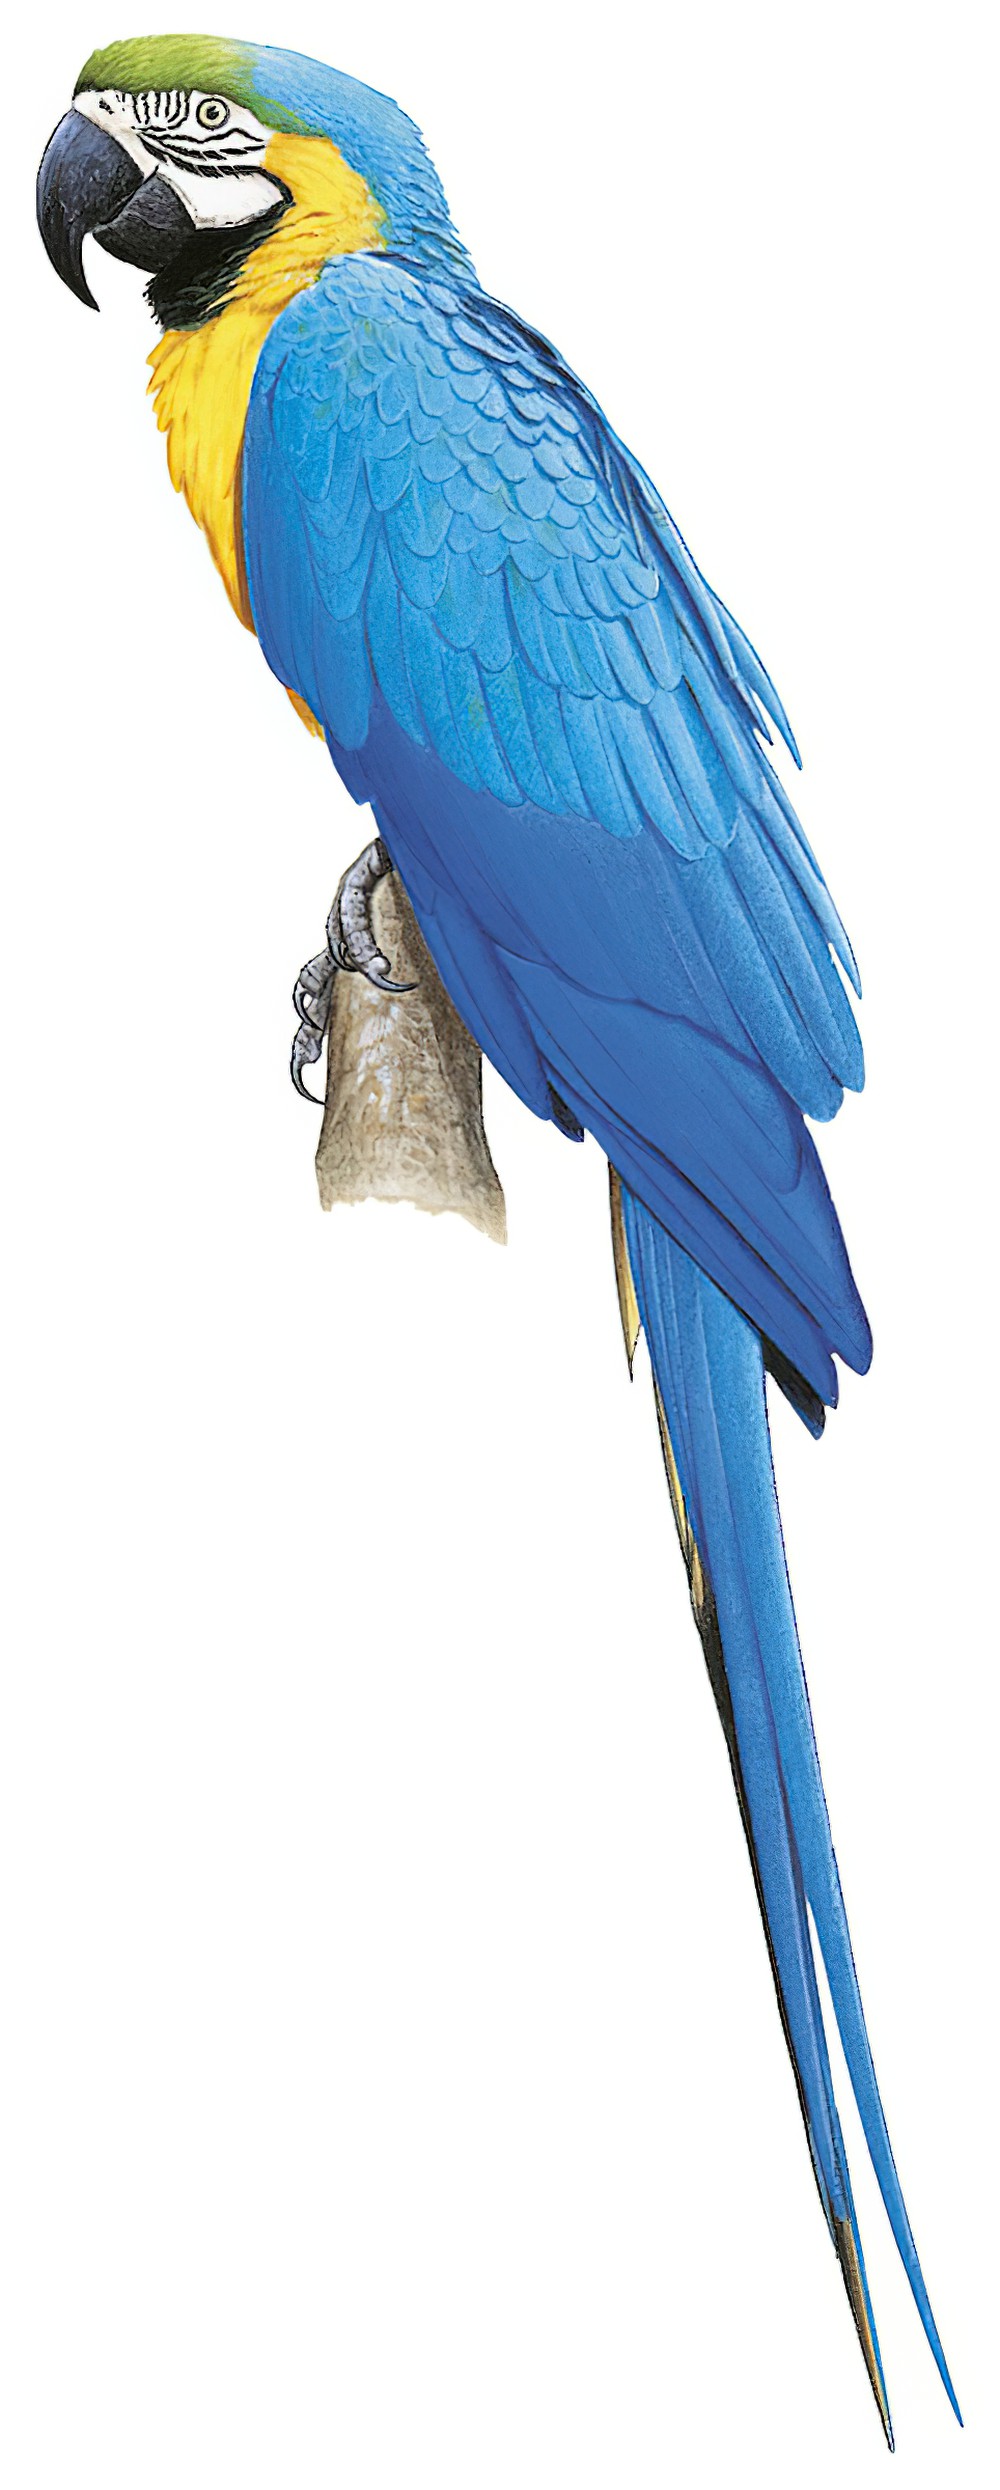 Blue-and-yellow Macaw / Ara ararauna